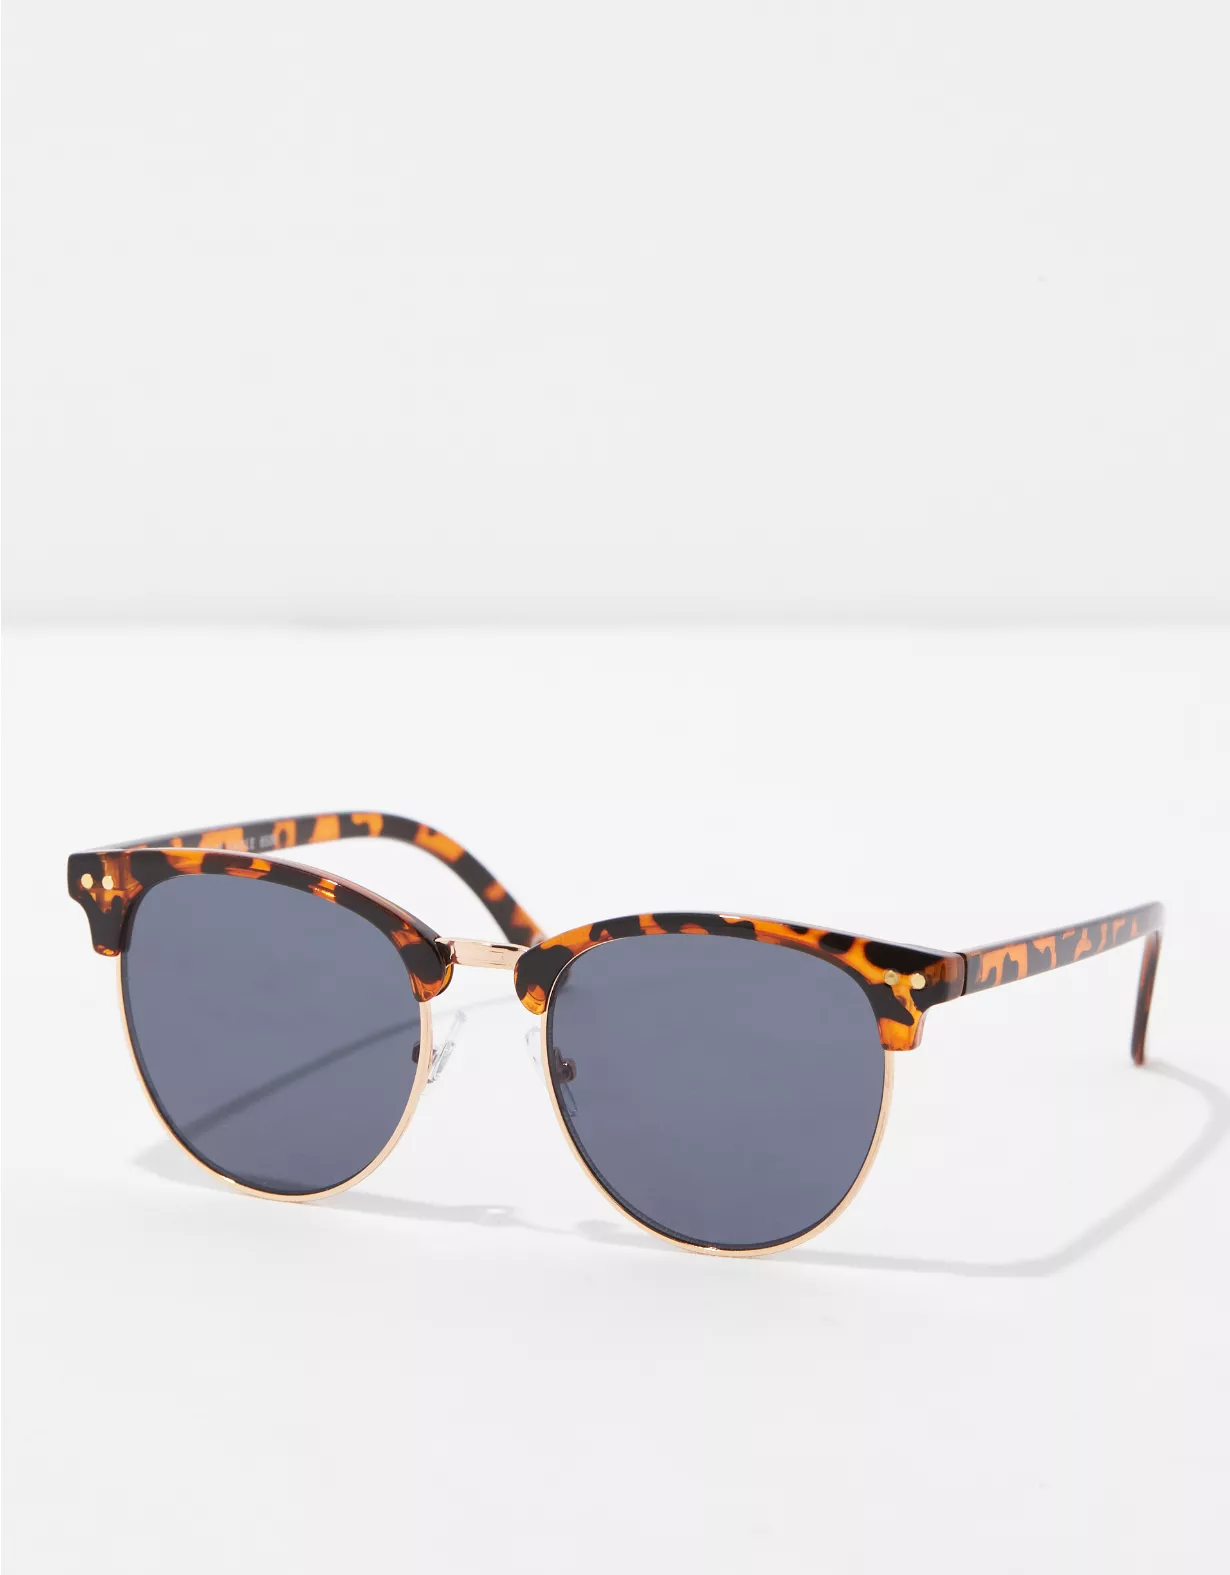 AEO Classic Tortoise Clubmaster Sunglasses